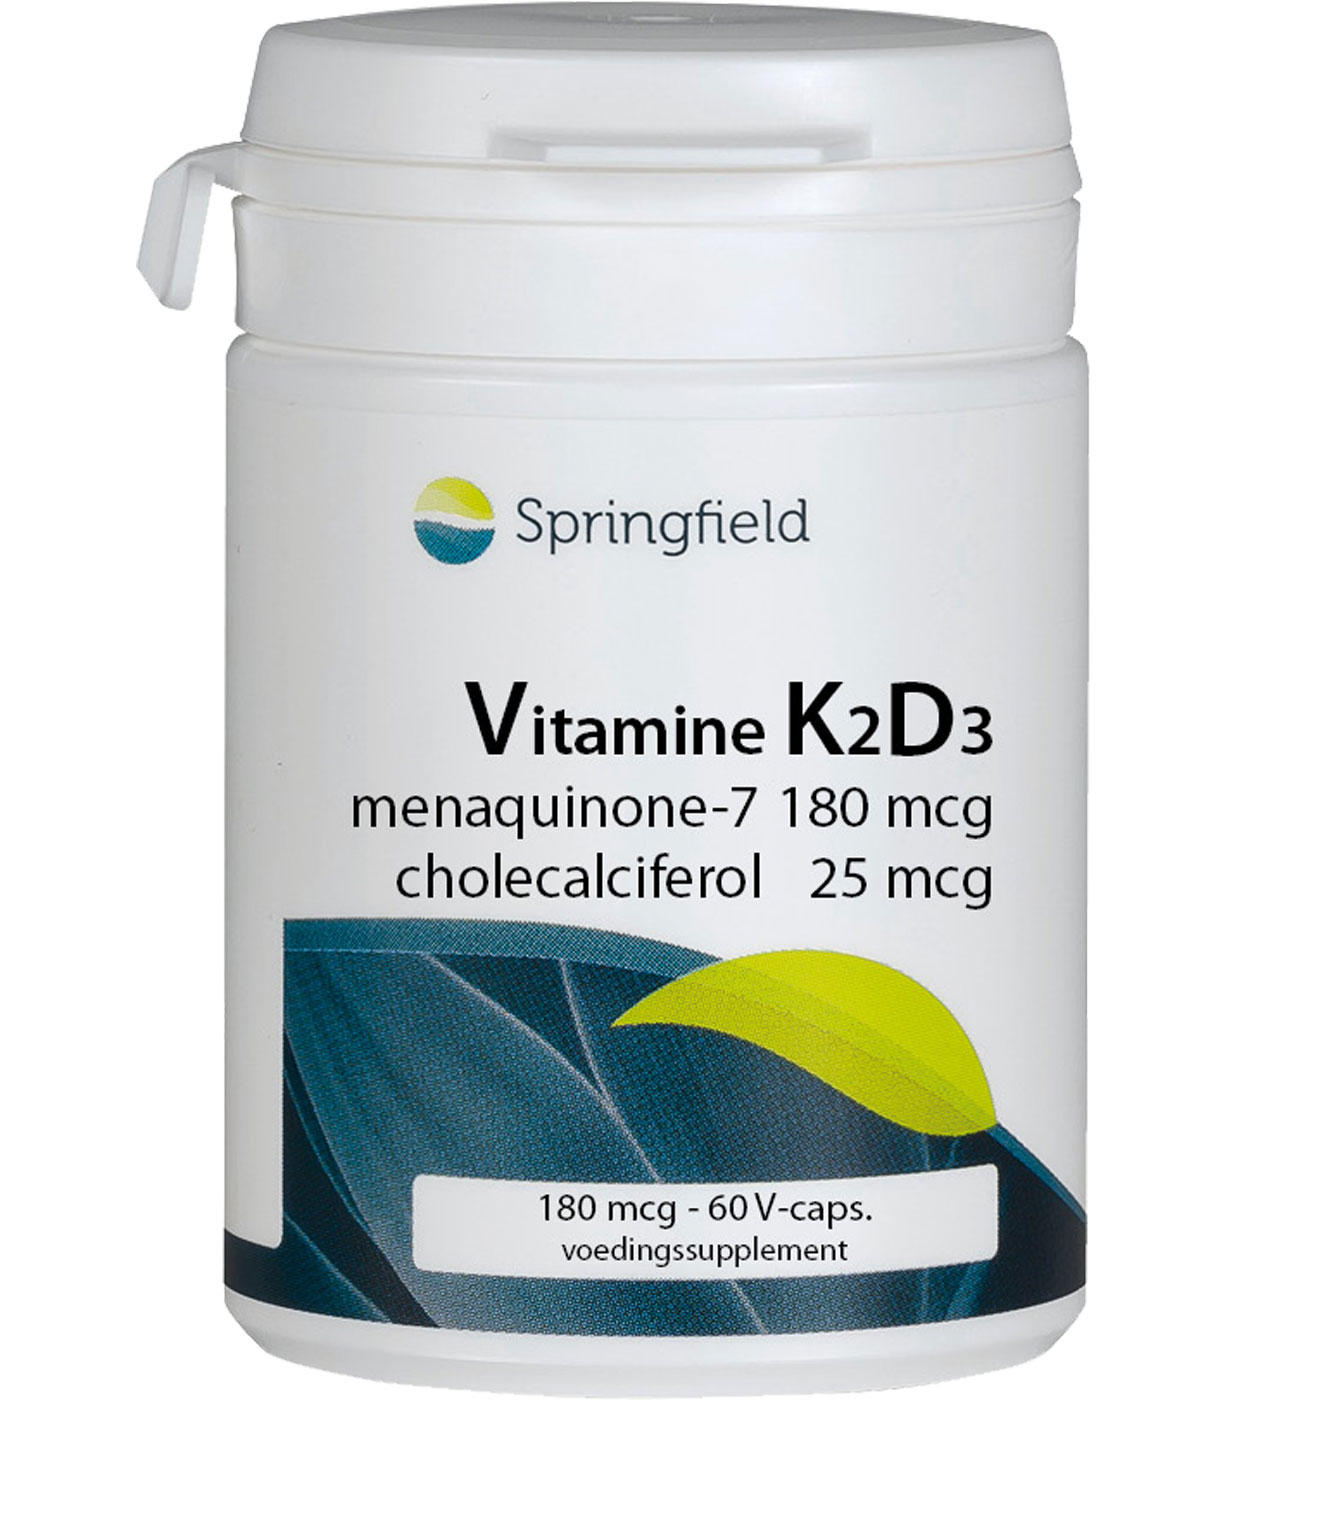 Vitamine K2D3 menaquinone-7 cholecalciferol